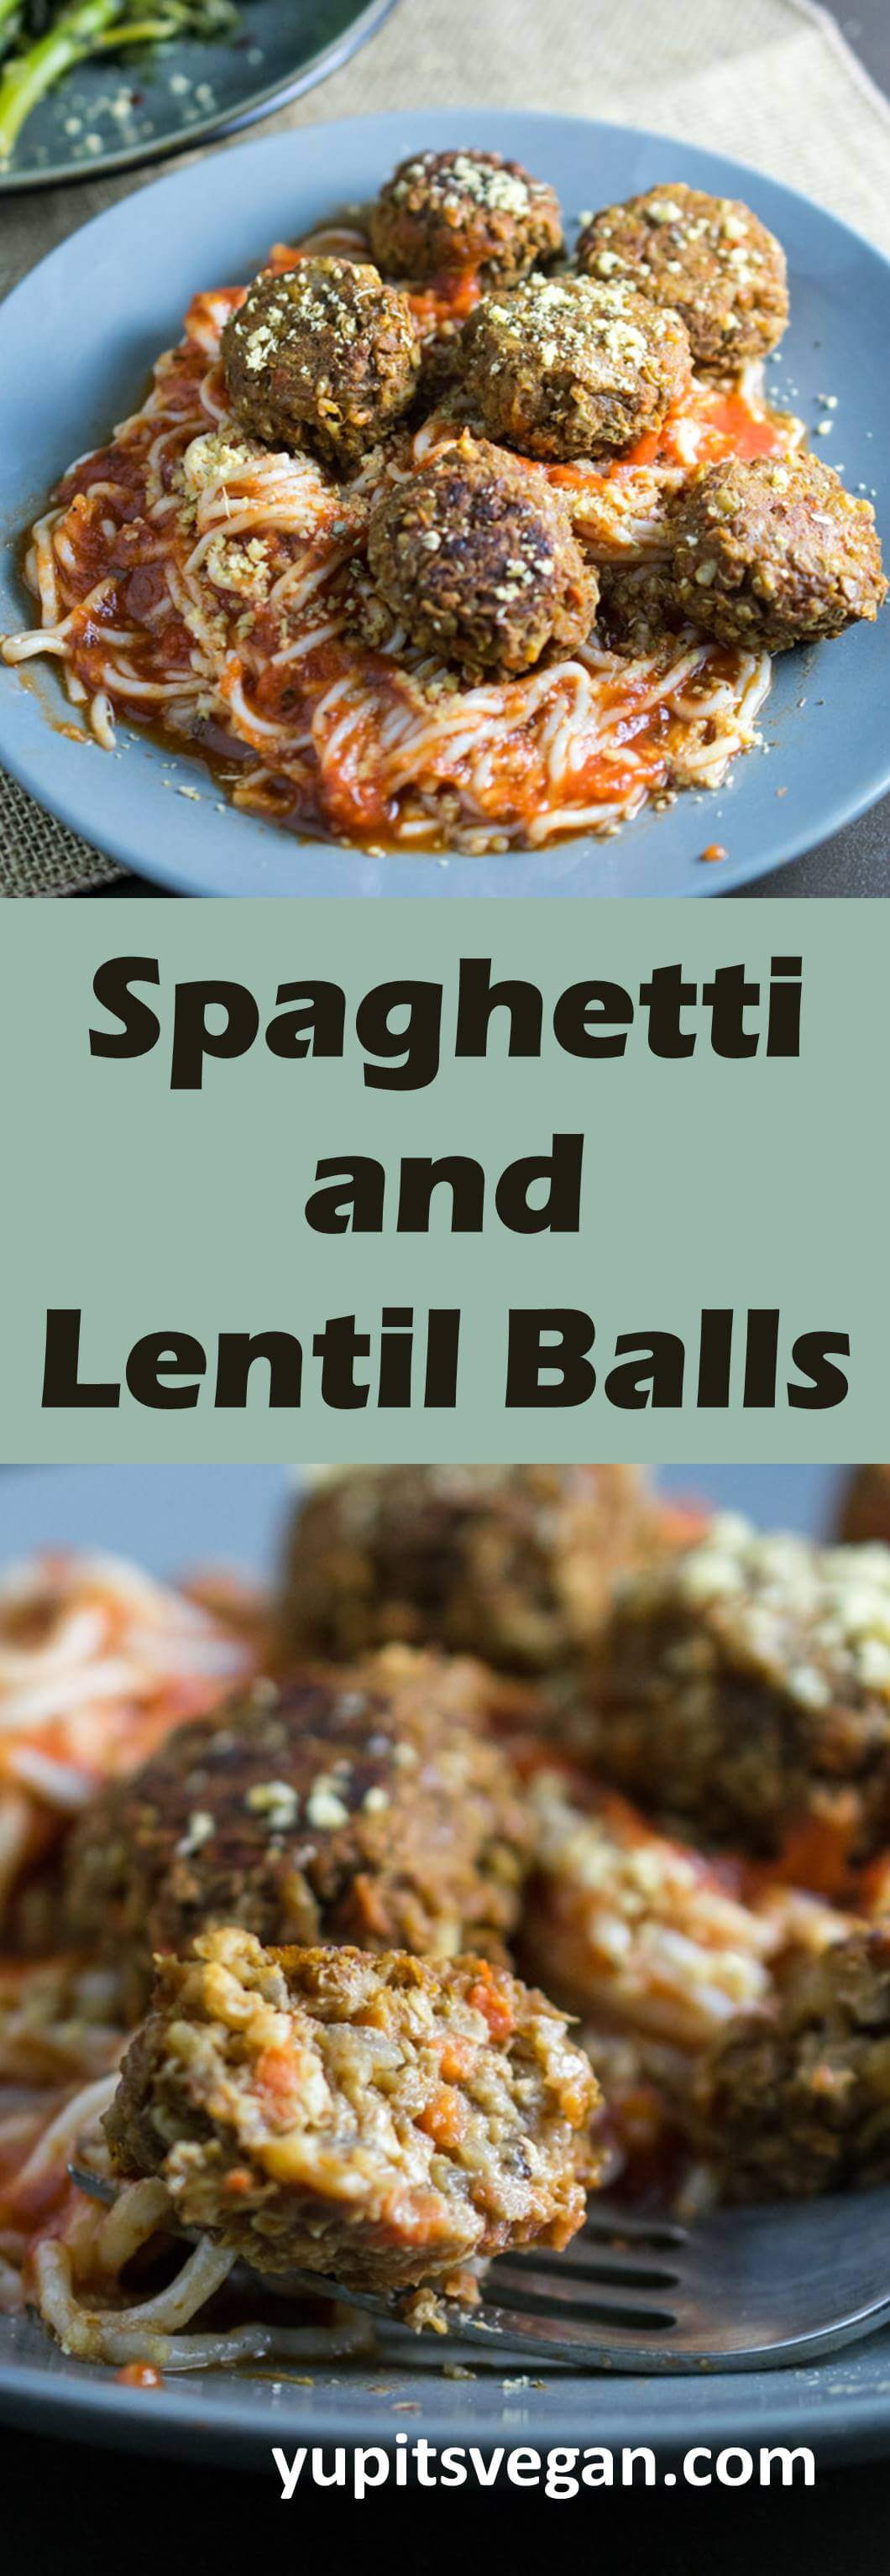 Healthy Spaghetti and Lentil Balls Recipe (Vegan, Grain-free)